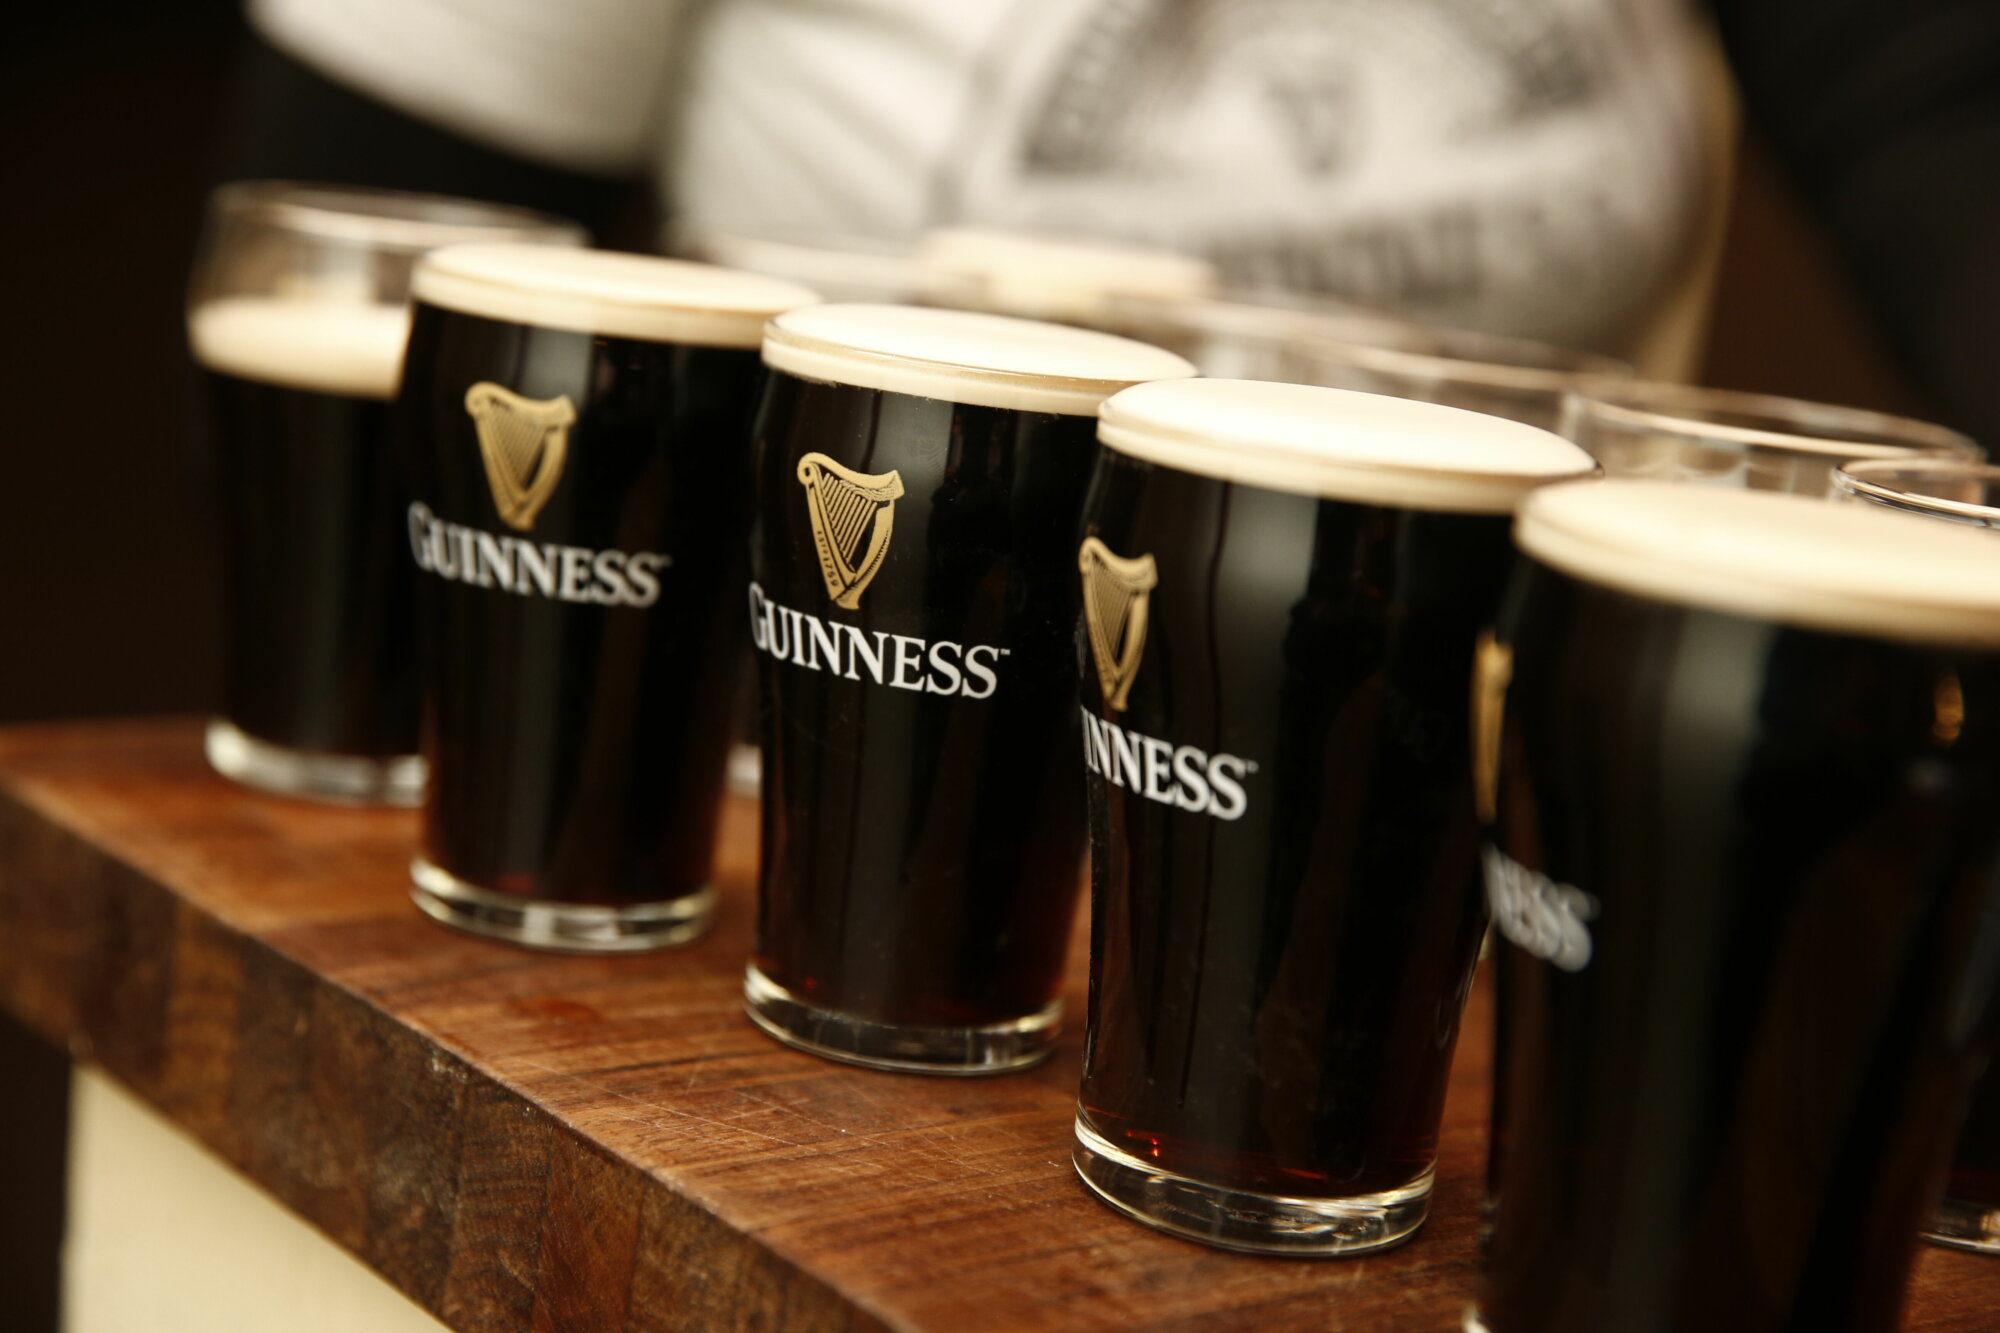 Guinness Beer, Draught Stout, Nitrogenated « Discount Drug Mart